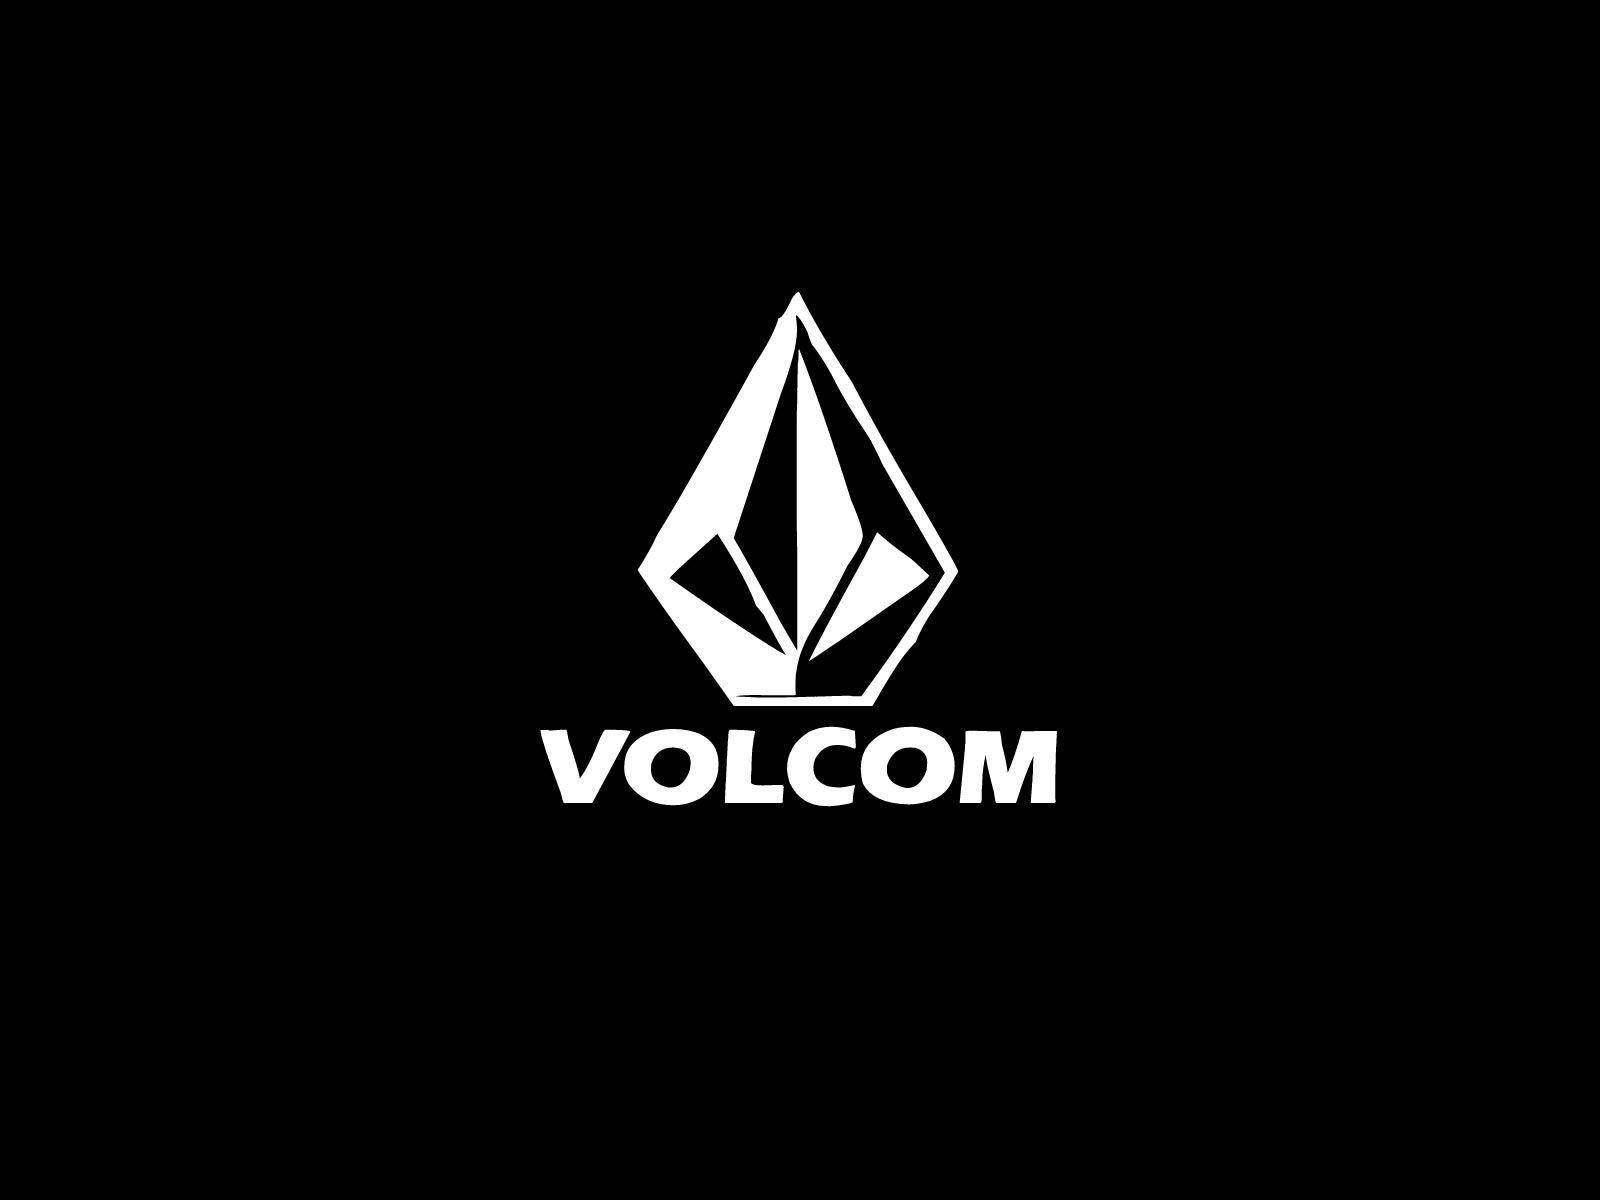 Volcom Logo Wallpaper 40812 1600x1200 px